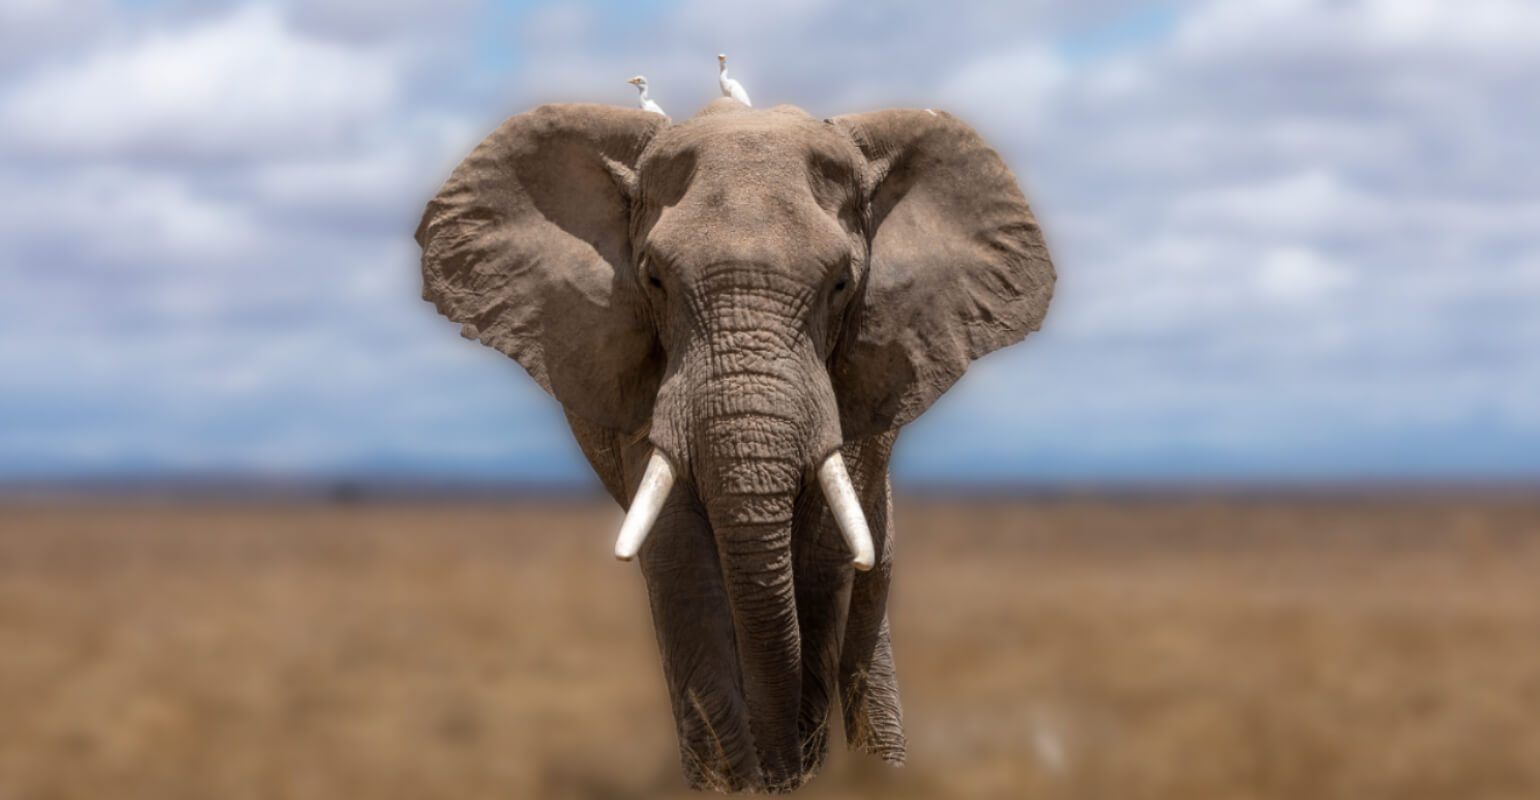 Elephant photo with blurred background